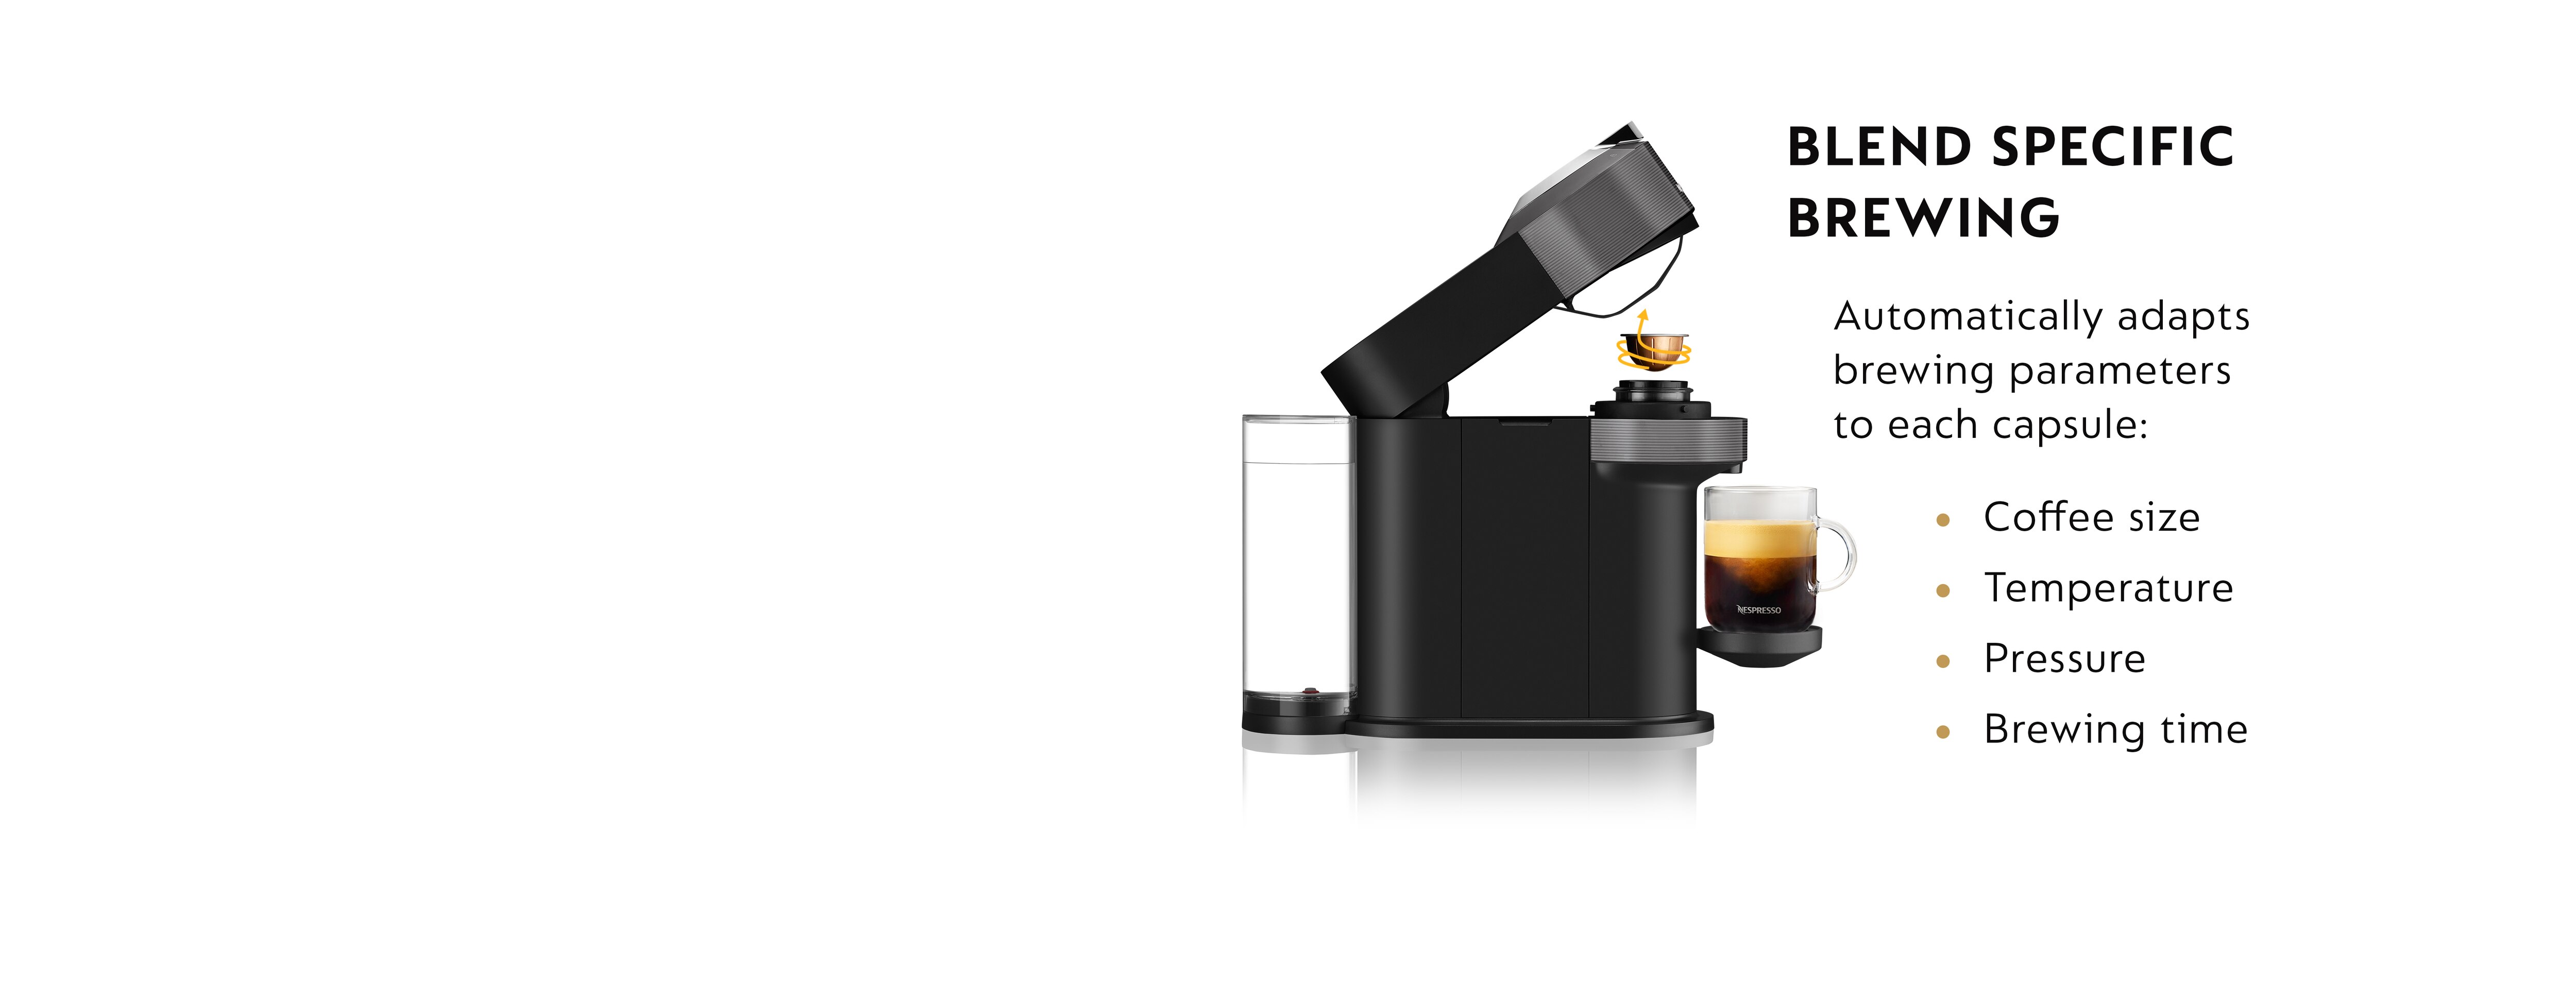 Krups Vertuo Next XN910N10 Cafetera Nespresso Negra